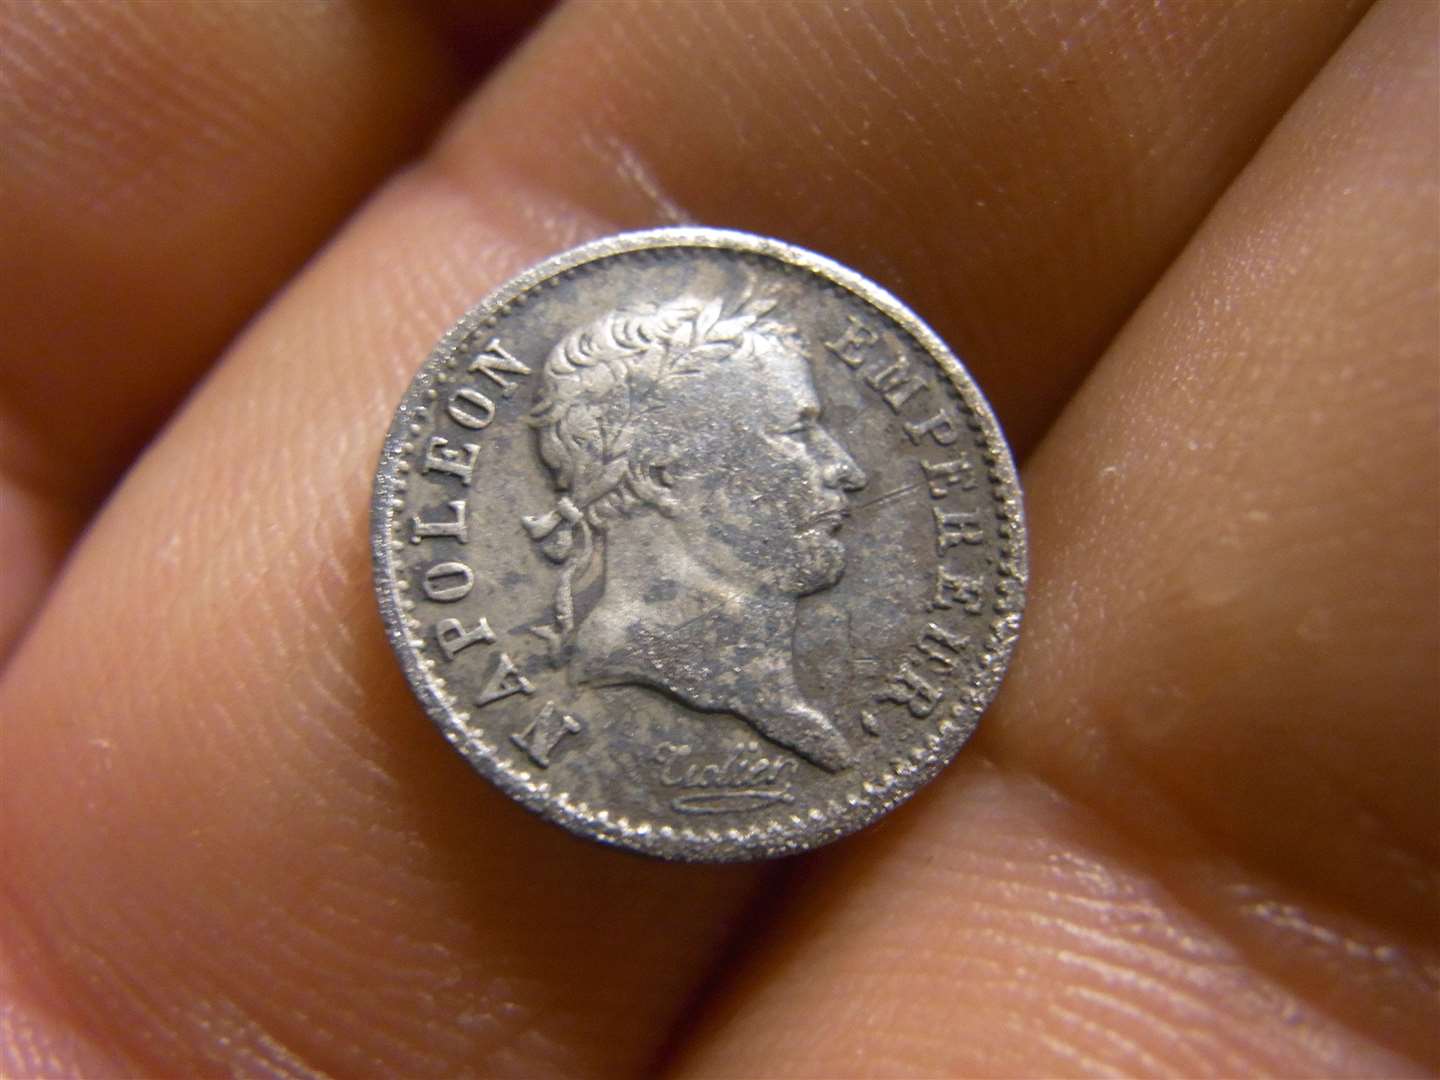 Michael Gallon found this tiny silver quarter franc of Napoleon Bonaparte at Fortrose.